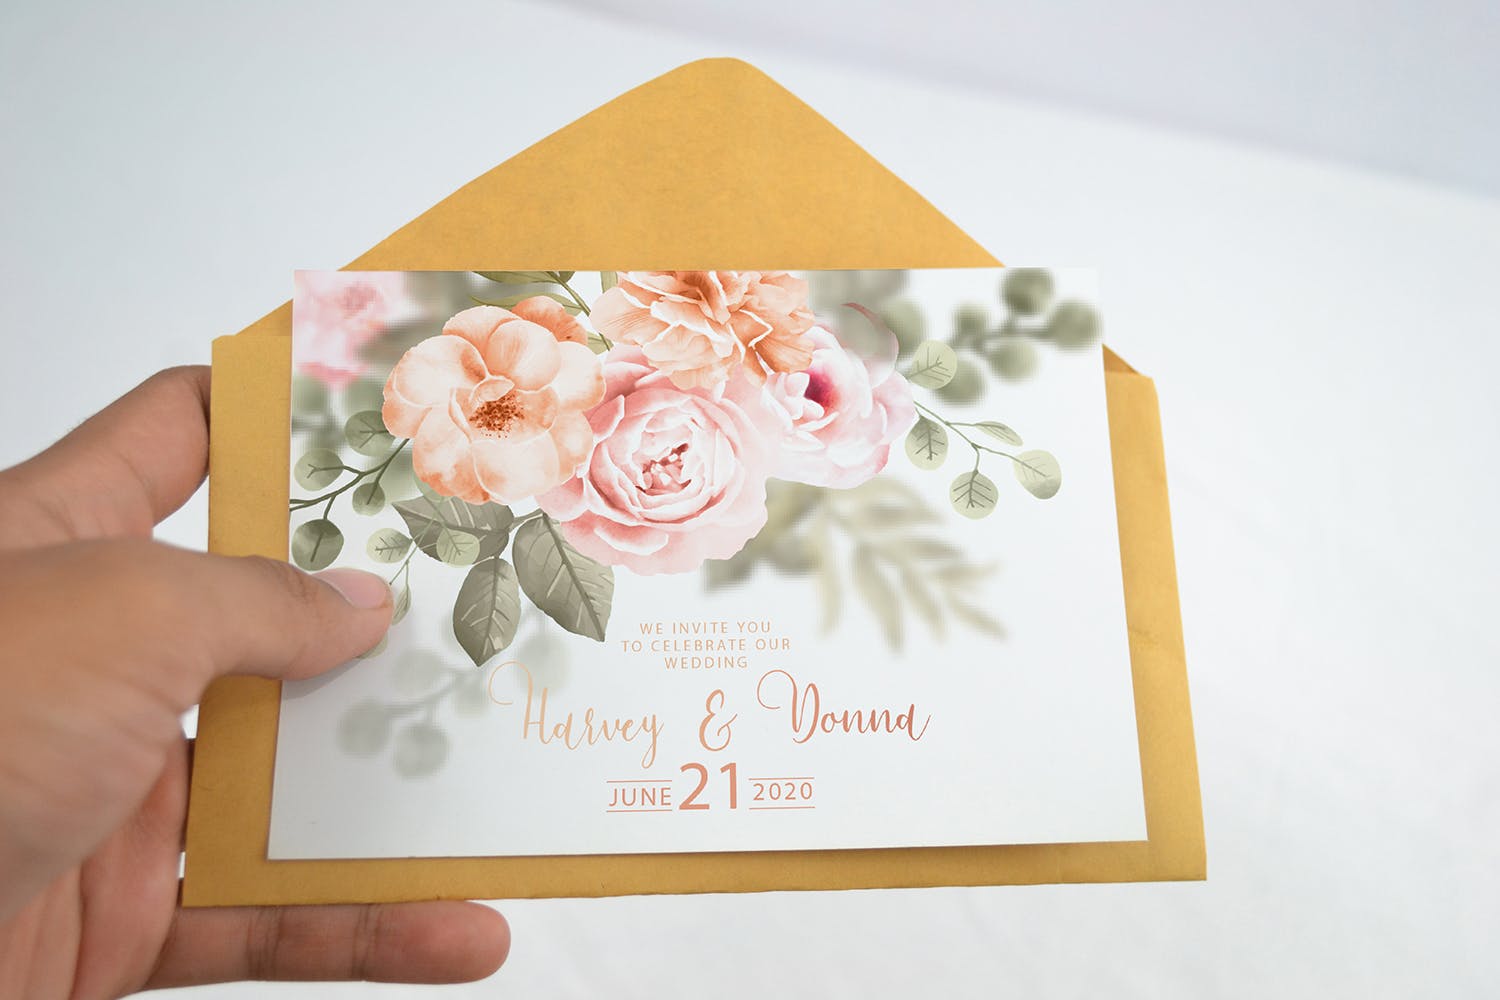 婚礼邀请函设计效果图样机素材库精选模板v2 Realistic Wedding Invitation Card Mockup V2插图(1)